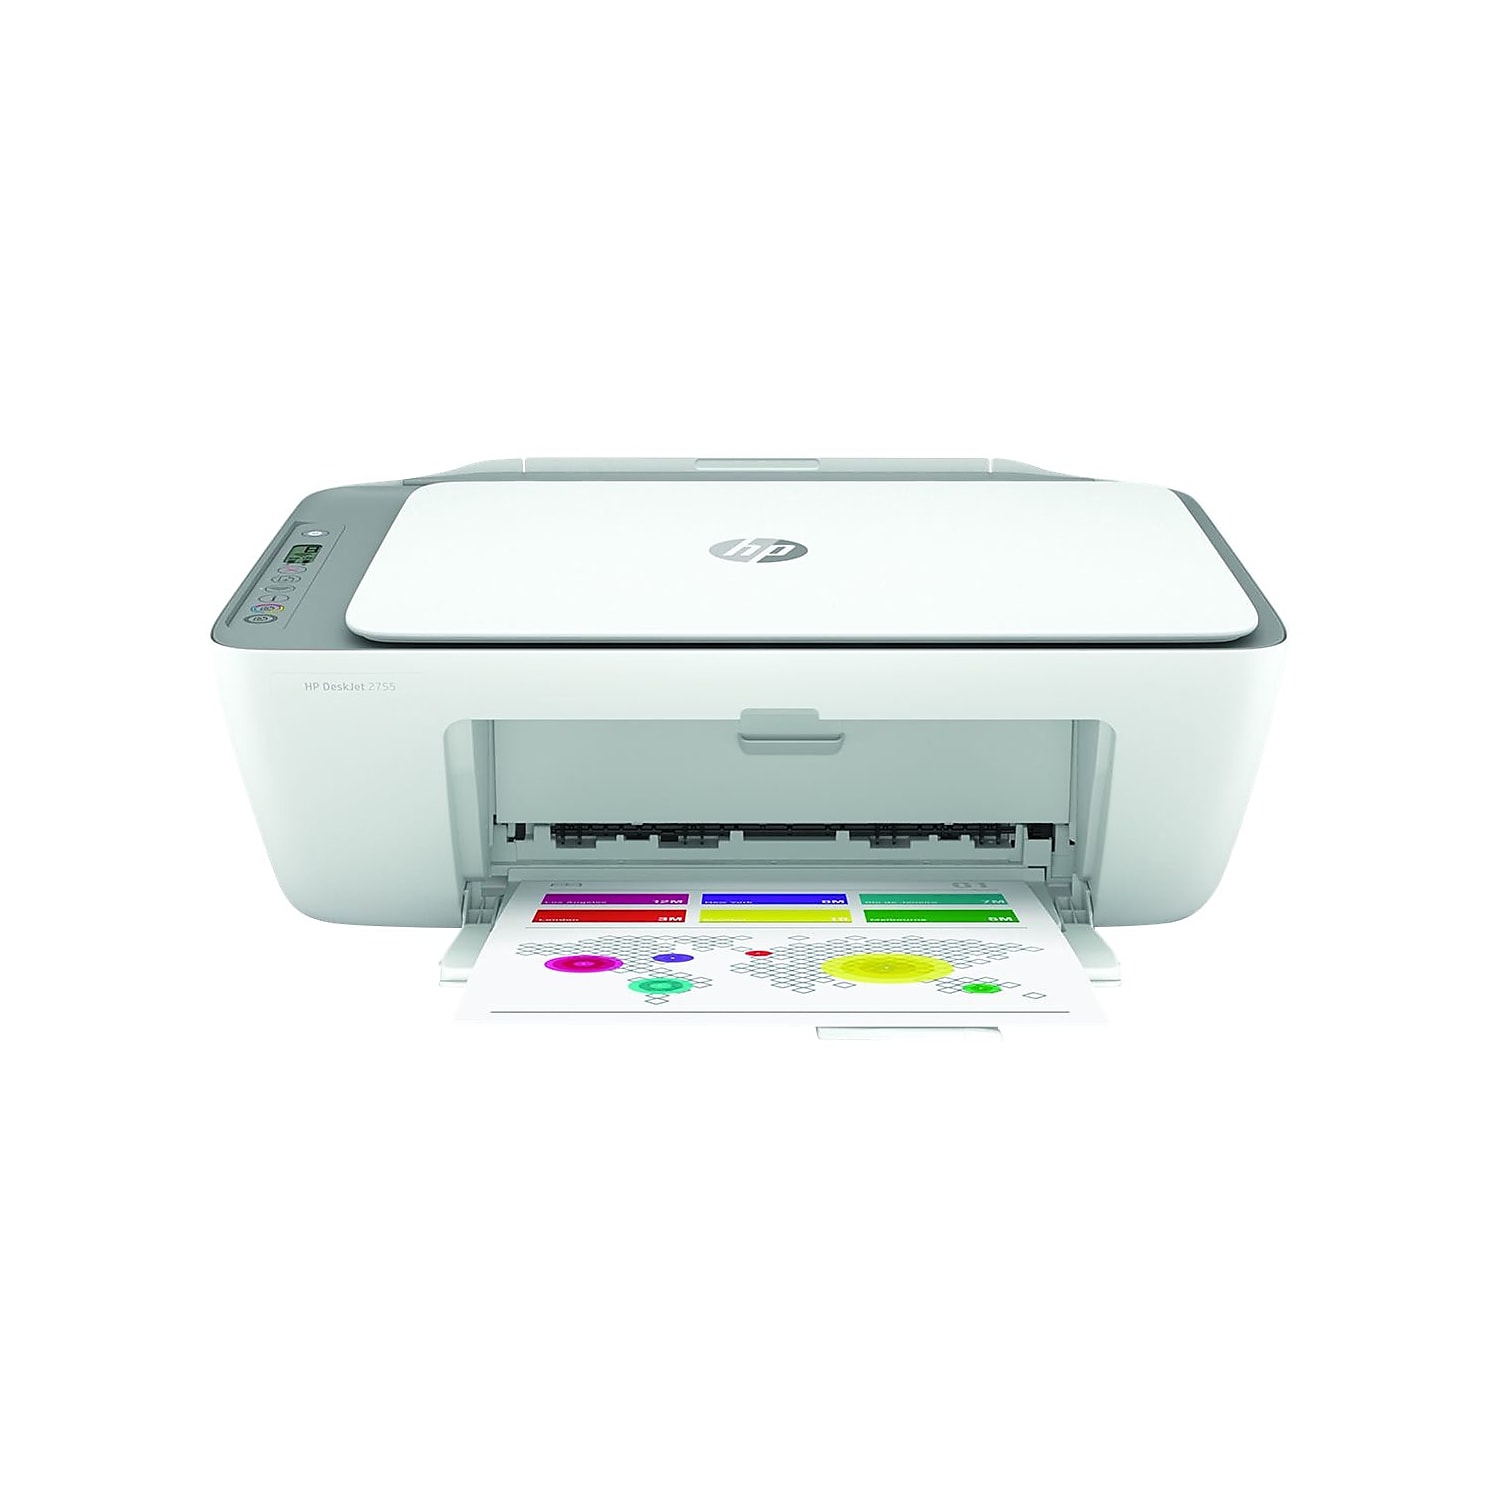 HP DeskJet 2755 All-in-One Printer - image 1 of 6